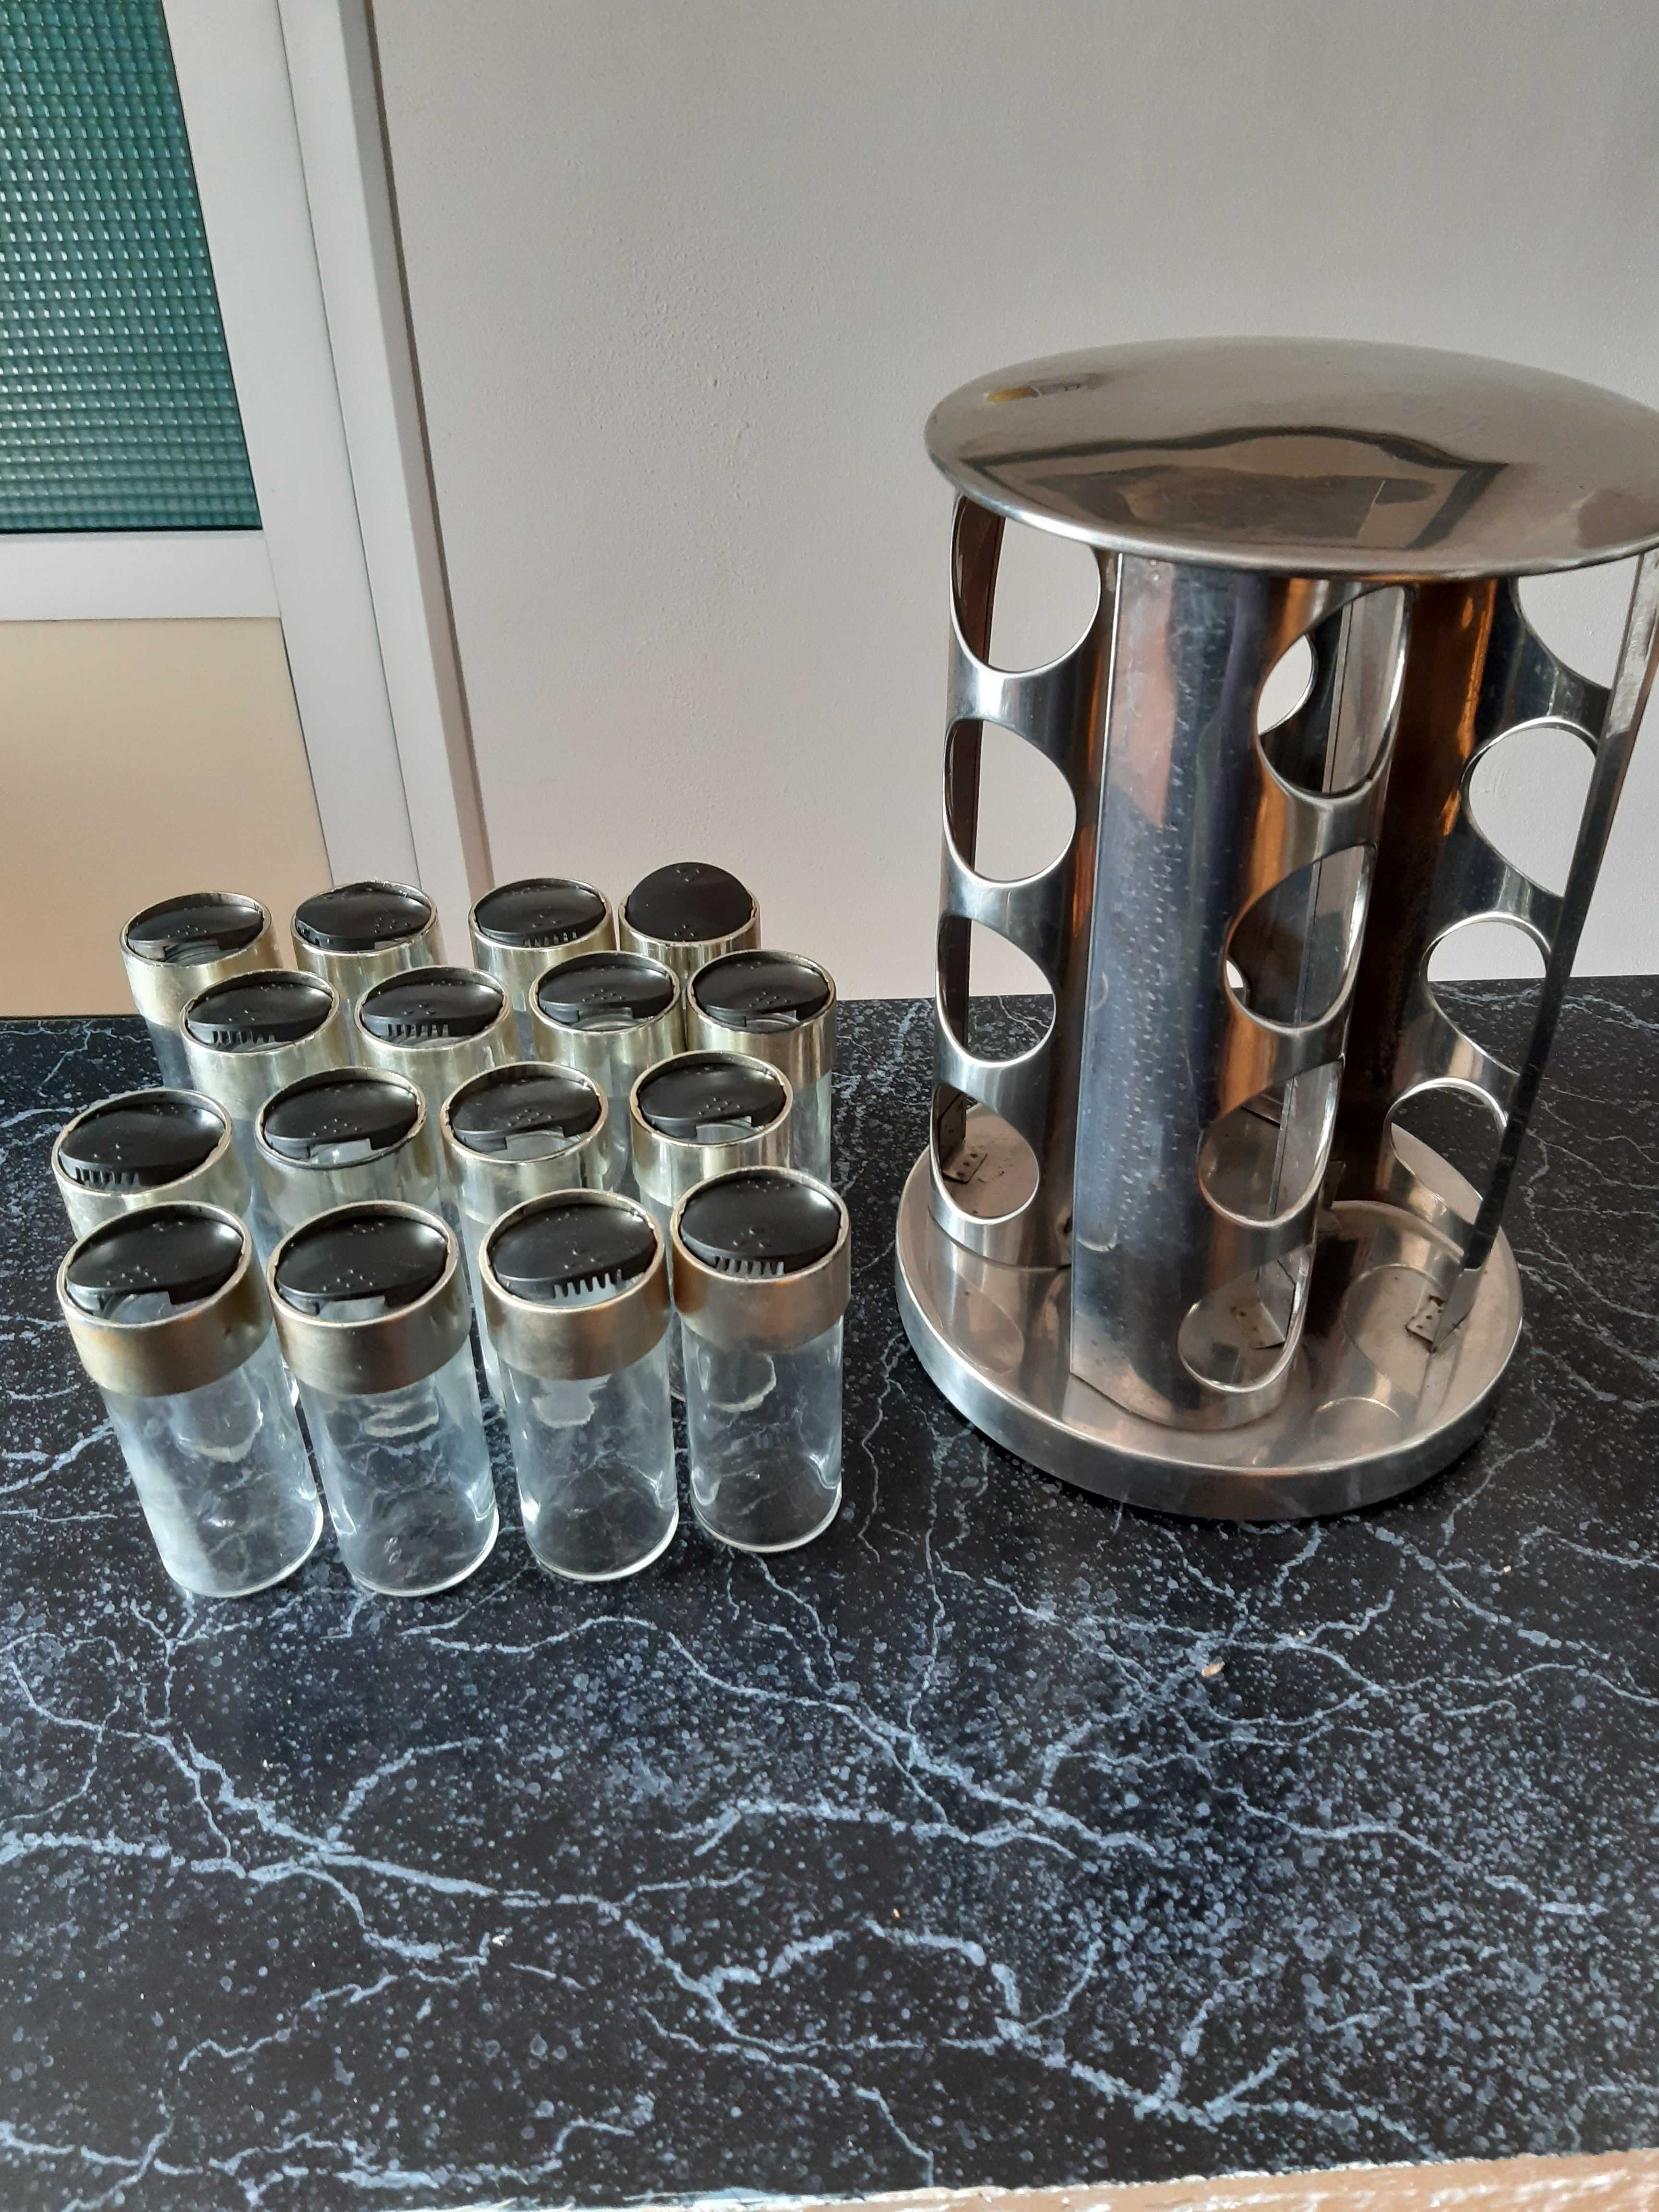 Suport rotativ inox, cu 16 recipiente sticla pt condimente, restaurat